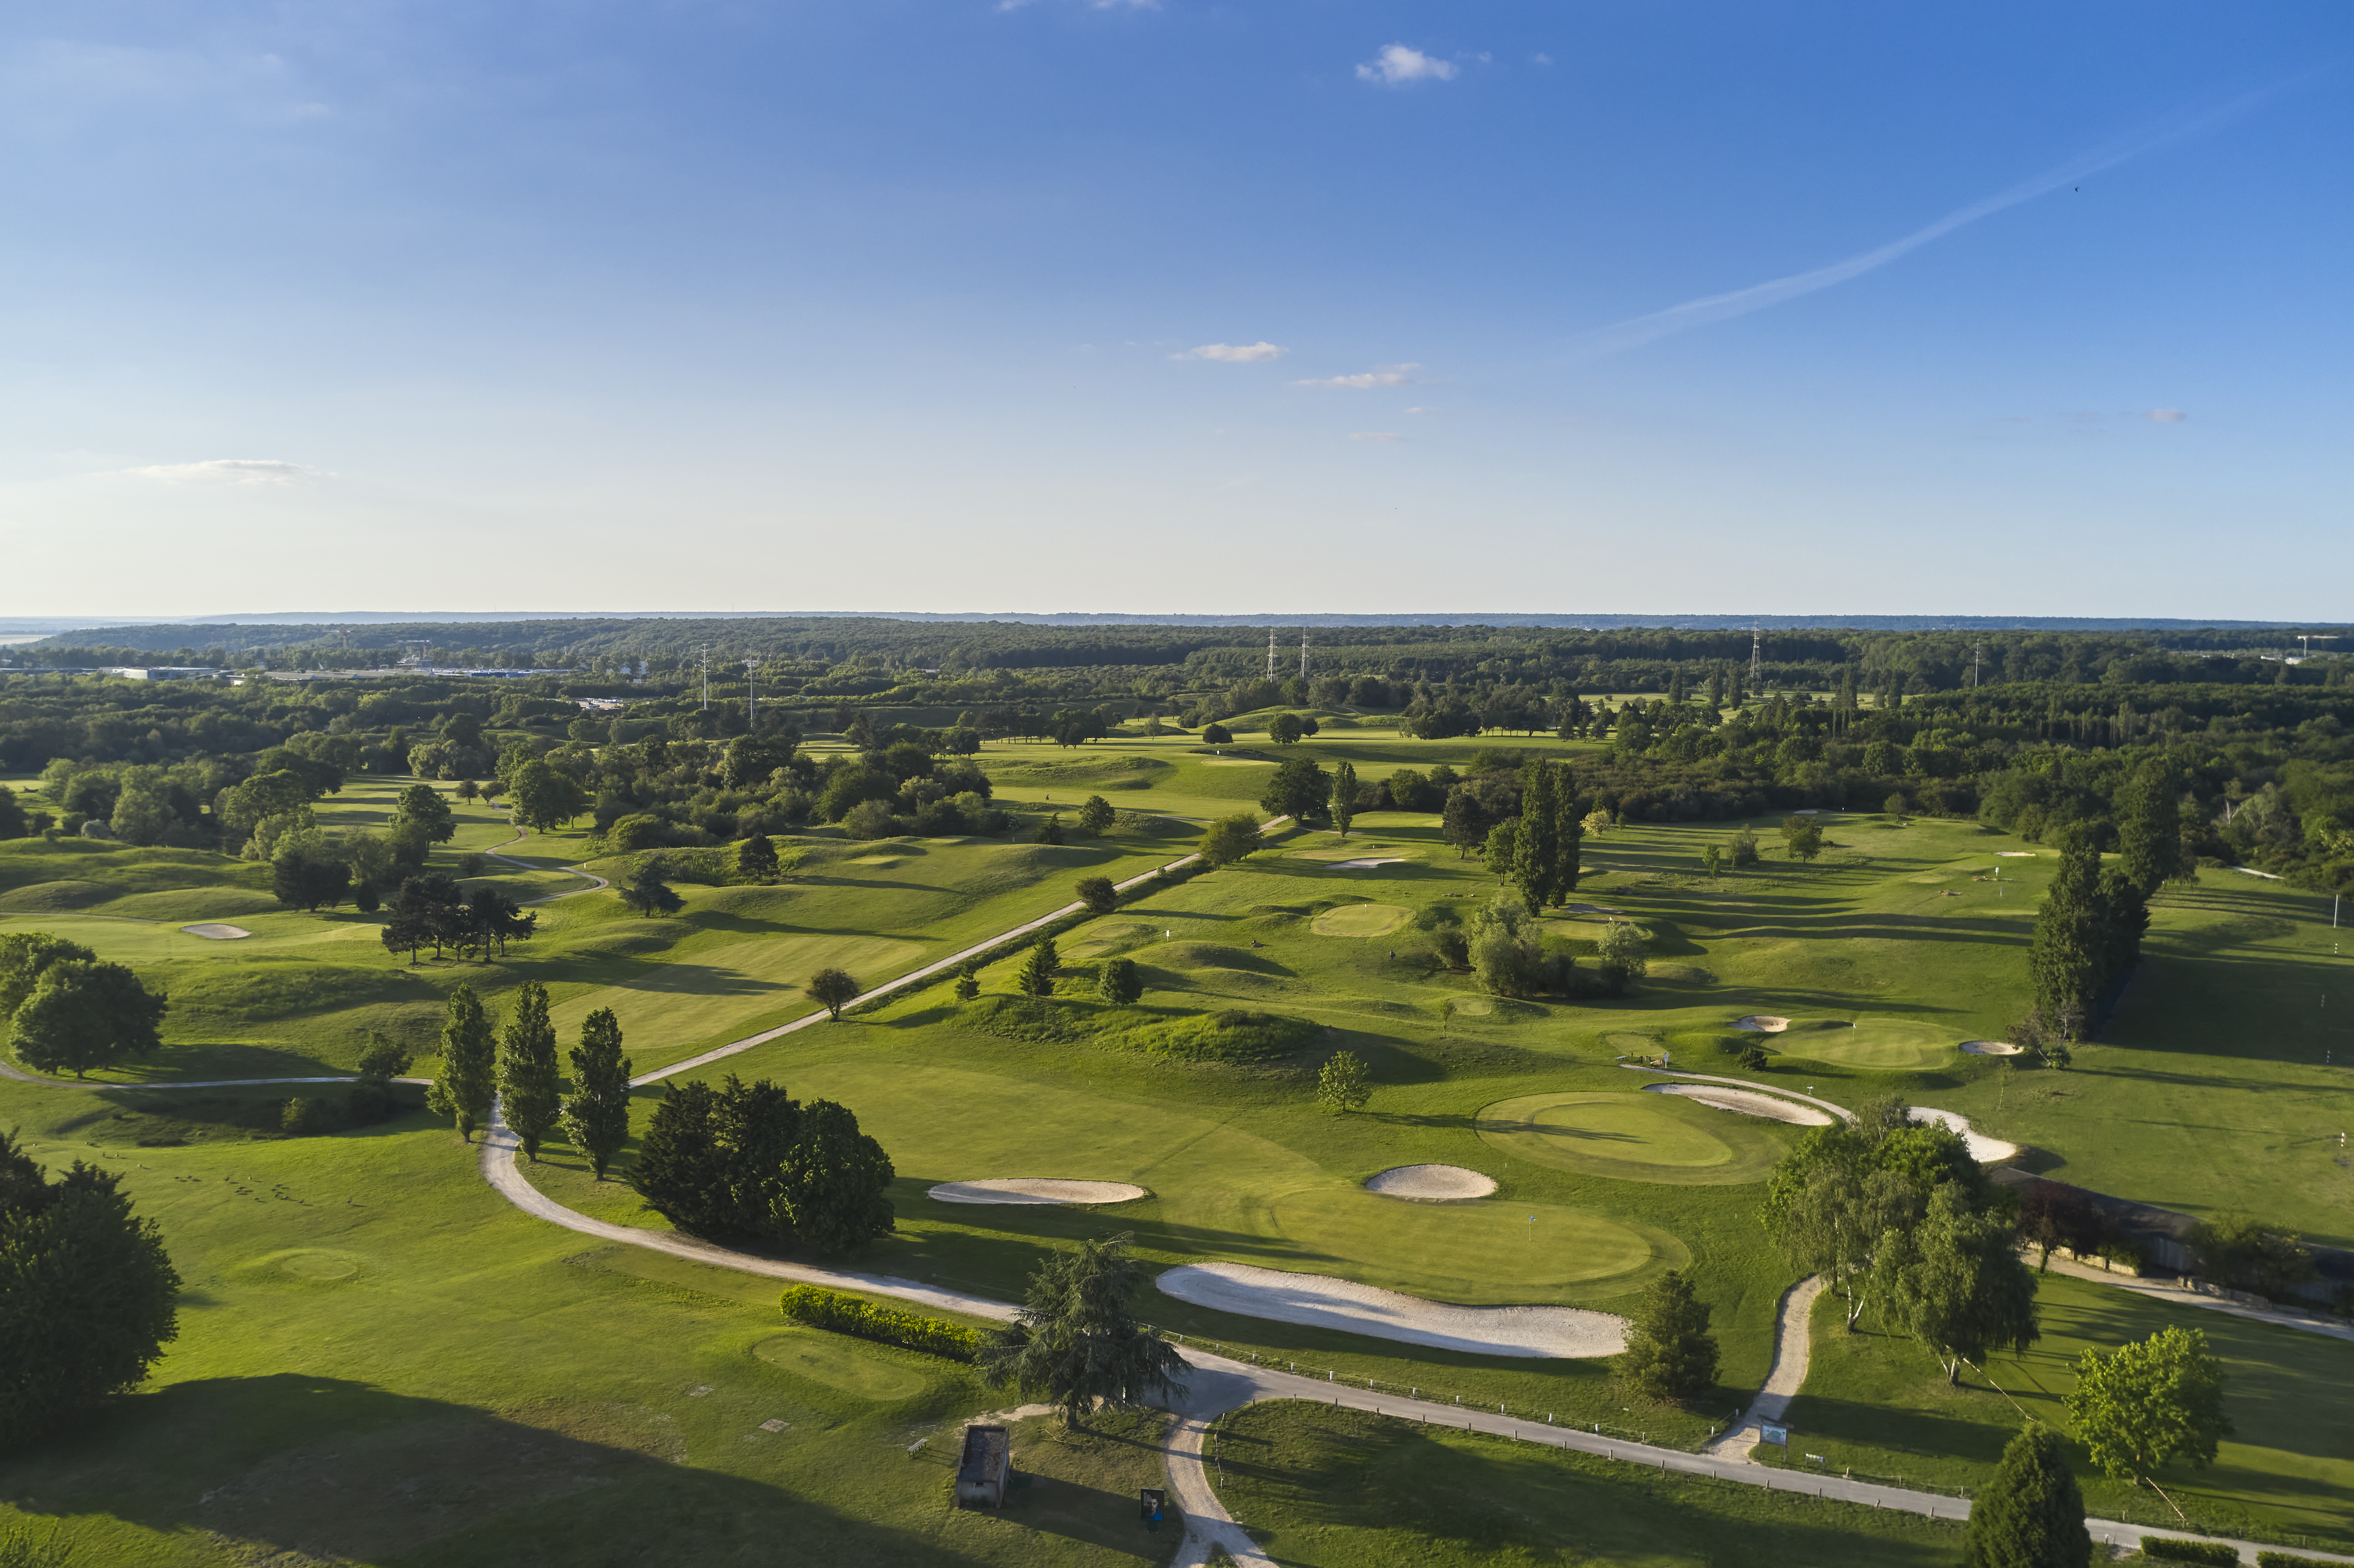 Golf Bluegreen Saint-Quentin-en-Yvelines